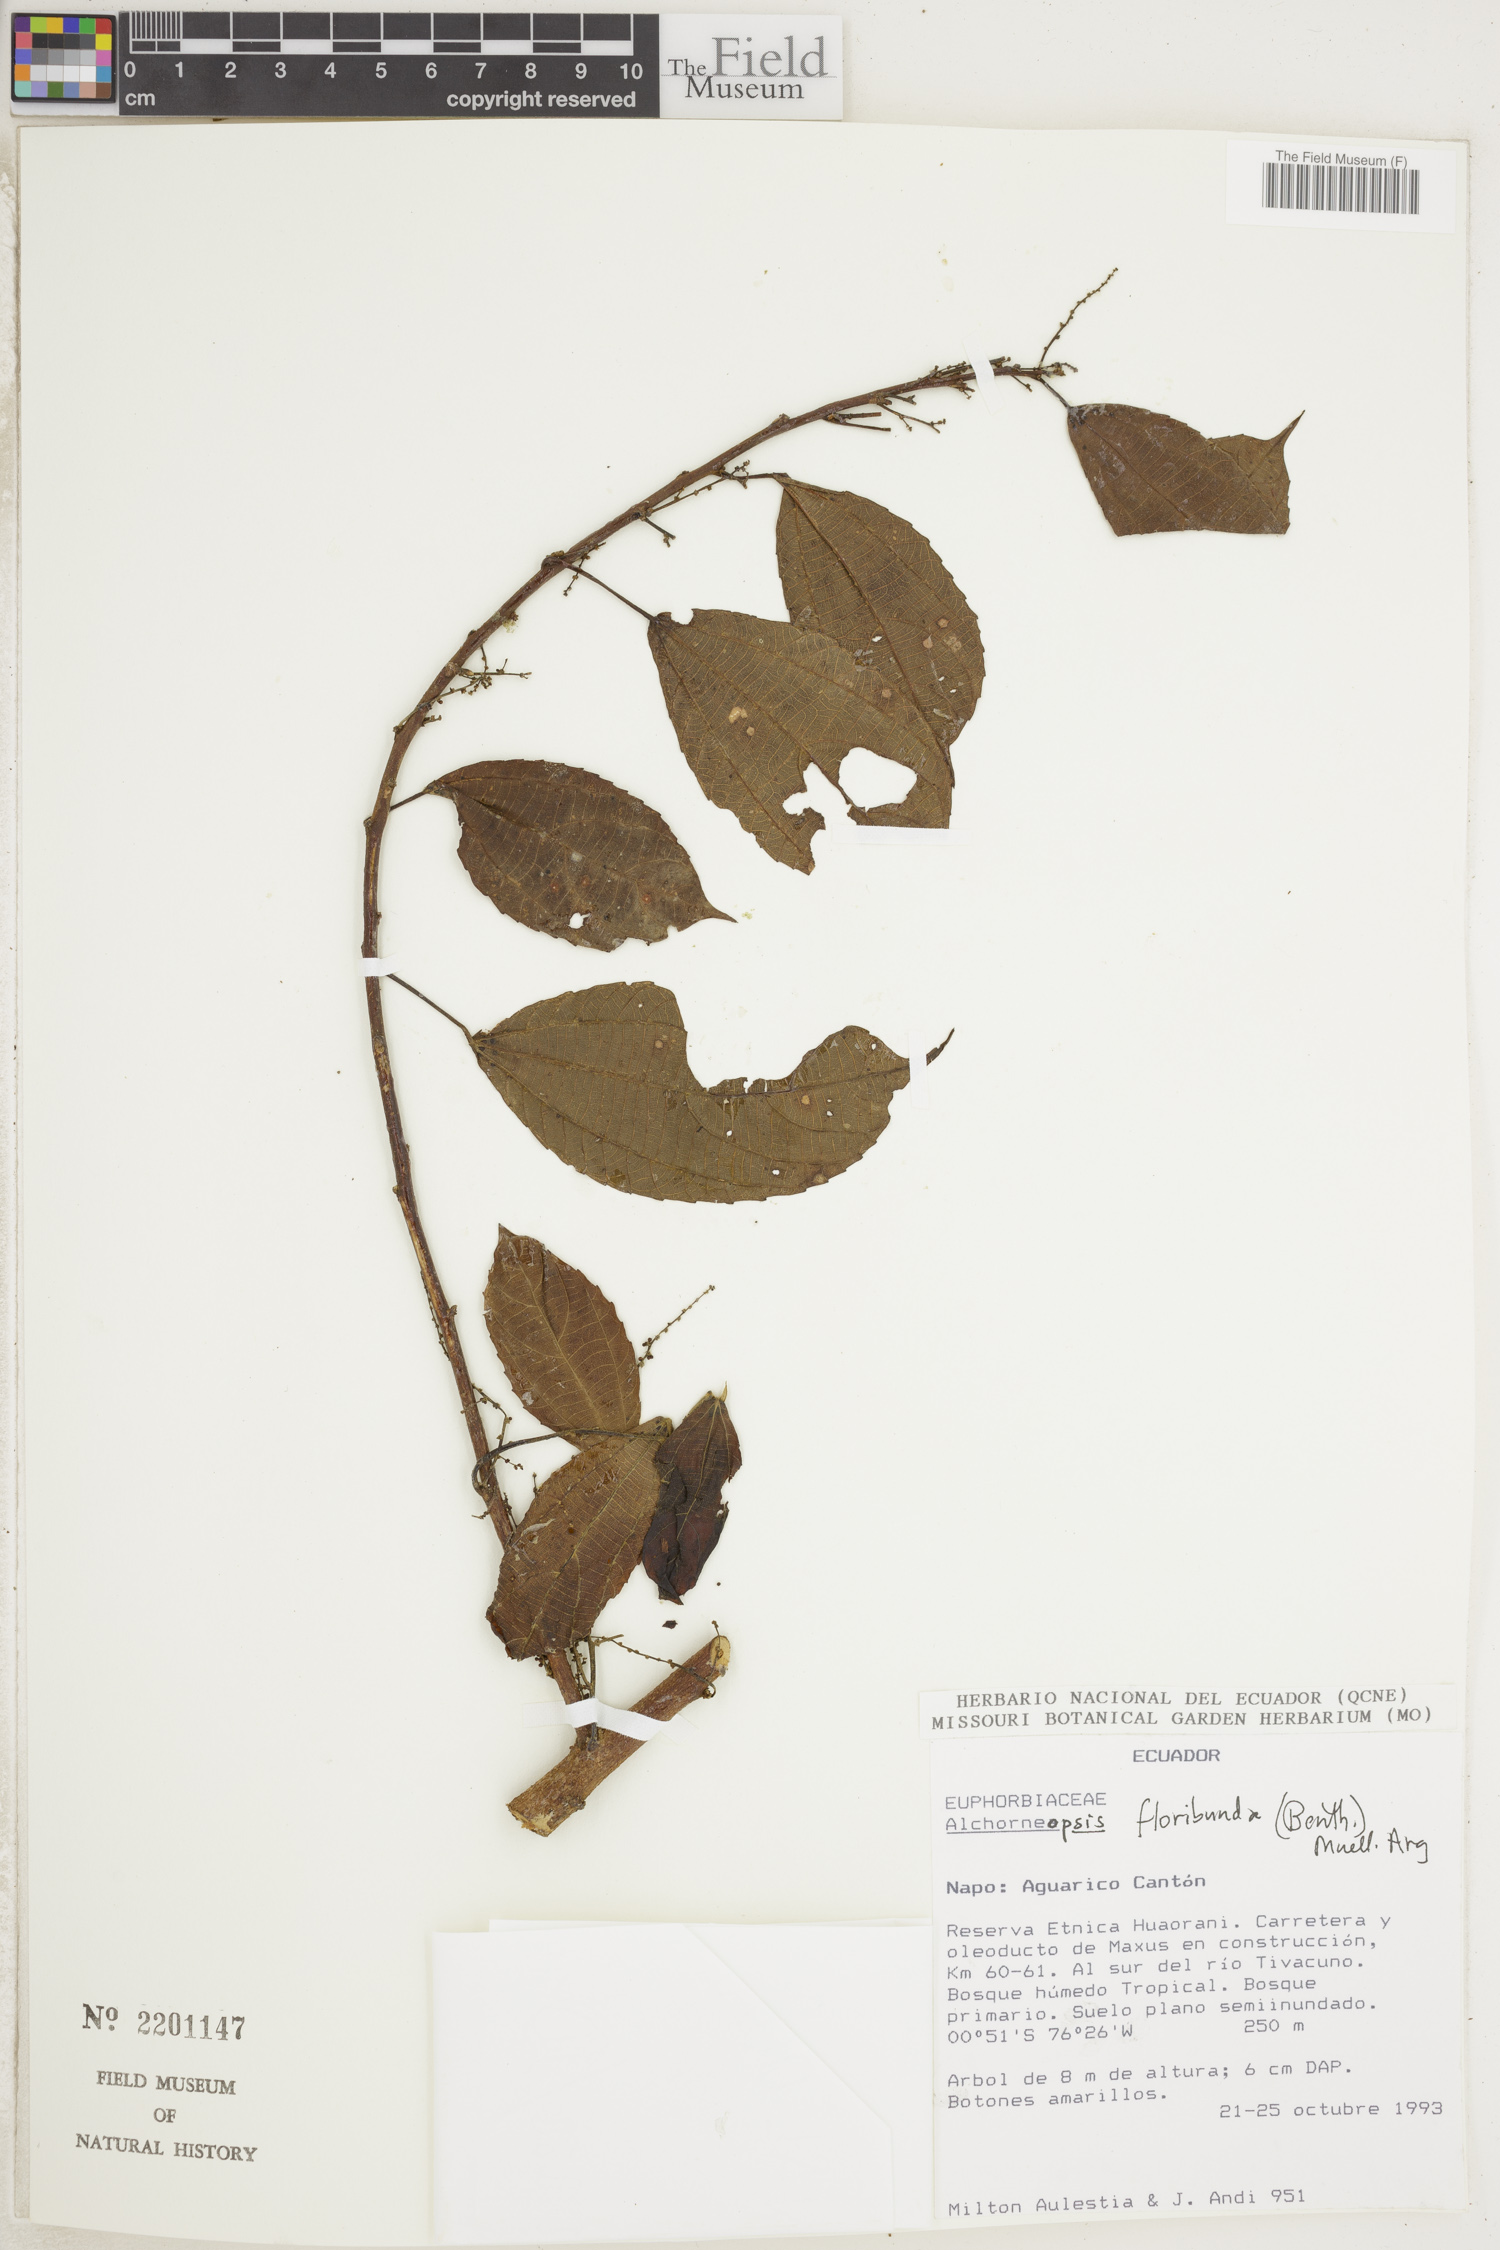 Alchorneopsis floribunda image